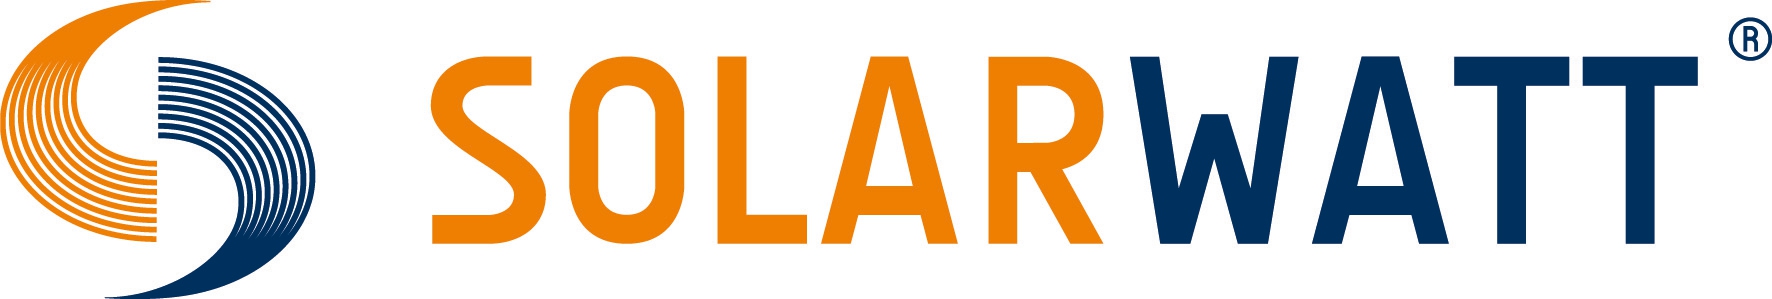 logo-solarwatt